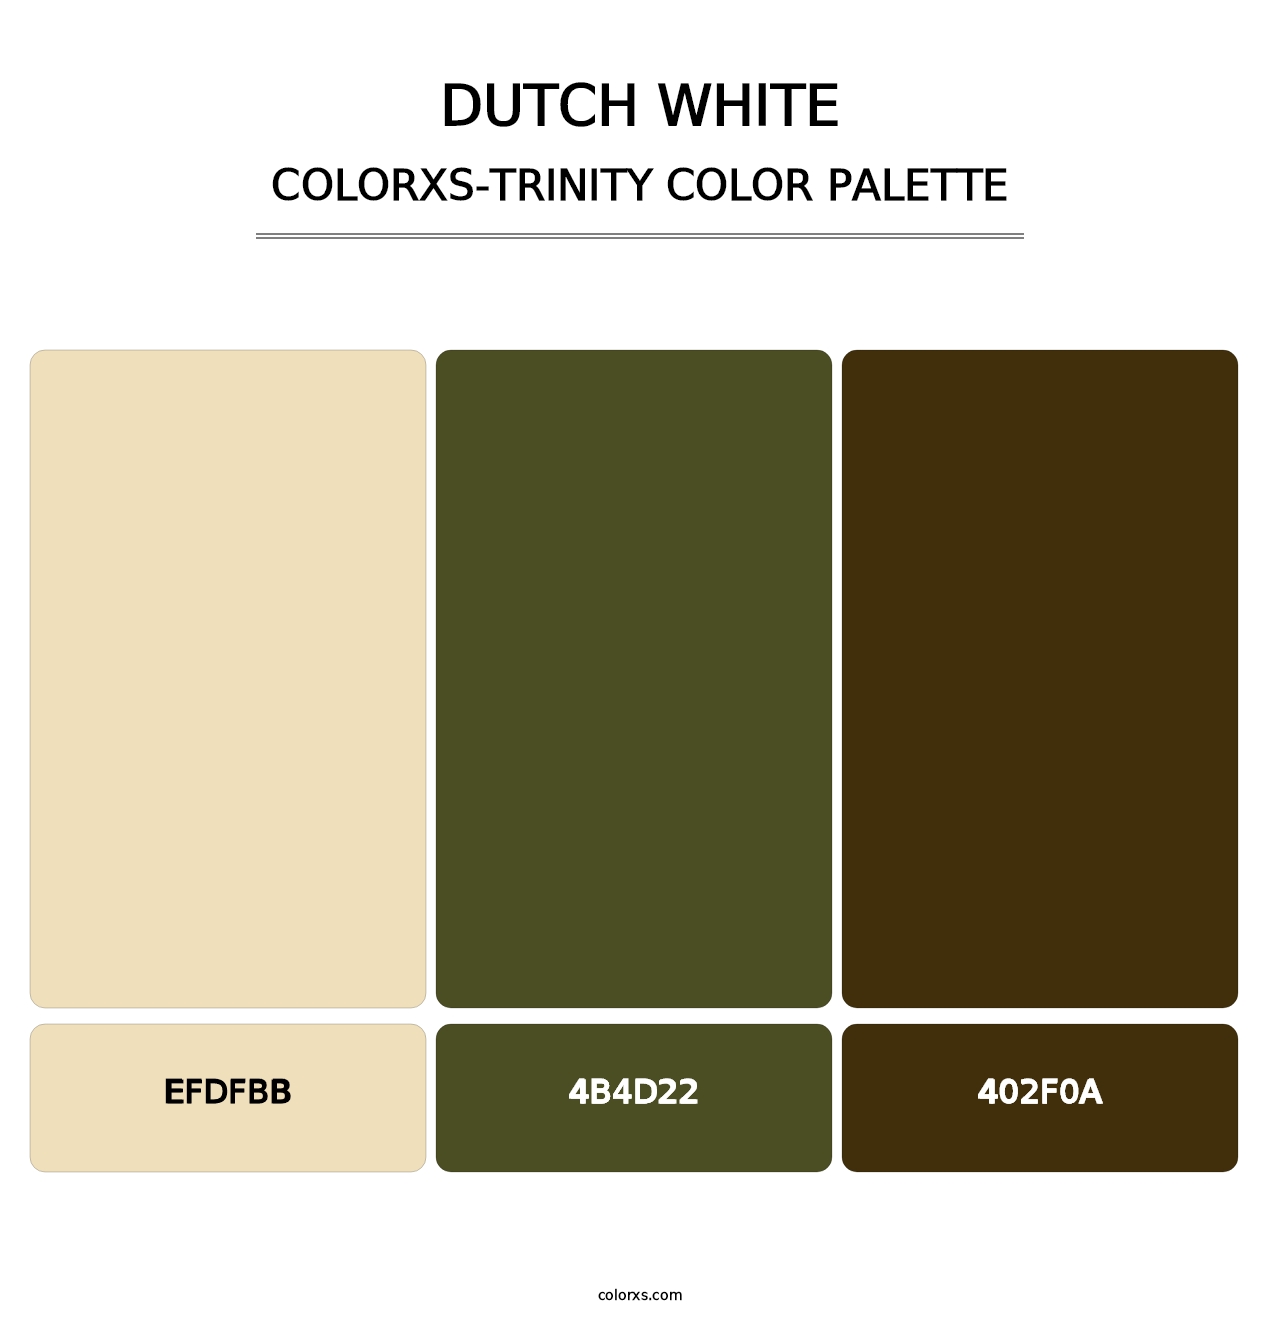 Dutch White - Colorxs Trinity Palette